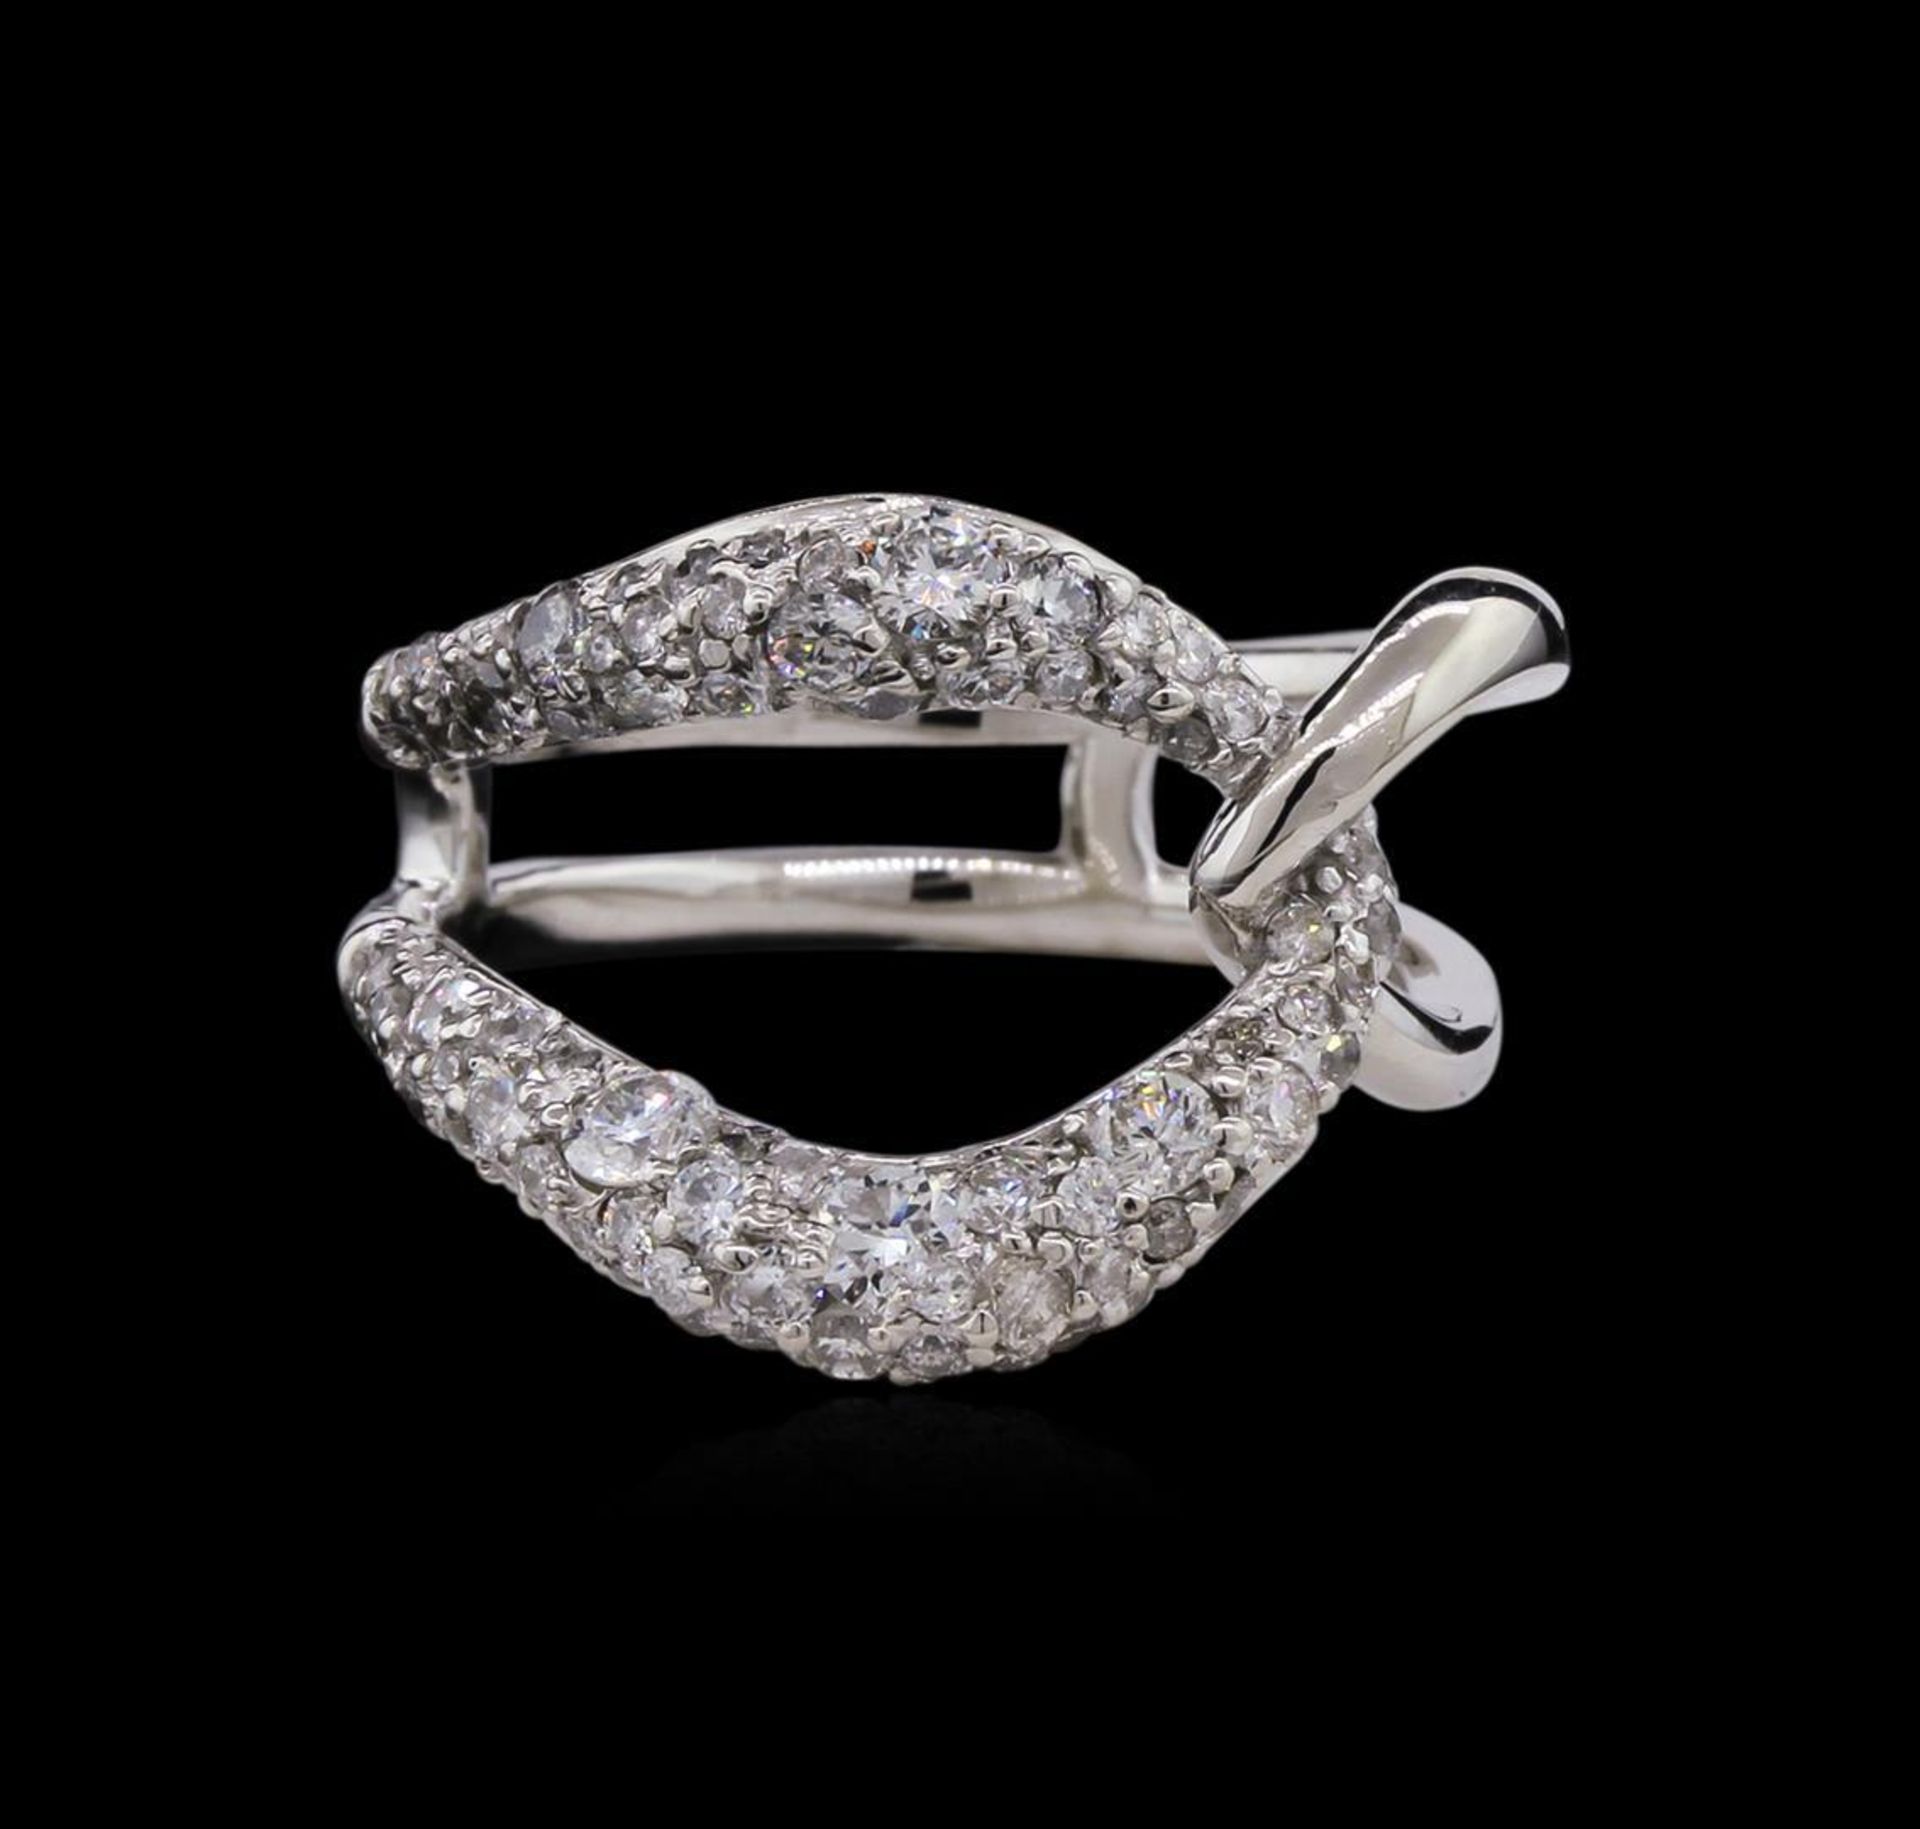 1.10ctw Diamond Ring - 14KT White Gold - Image 2 of 3